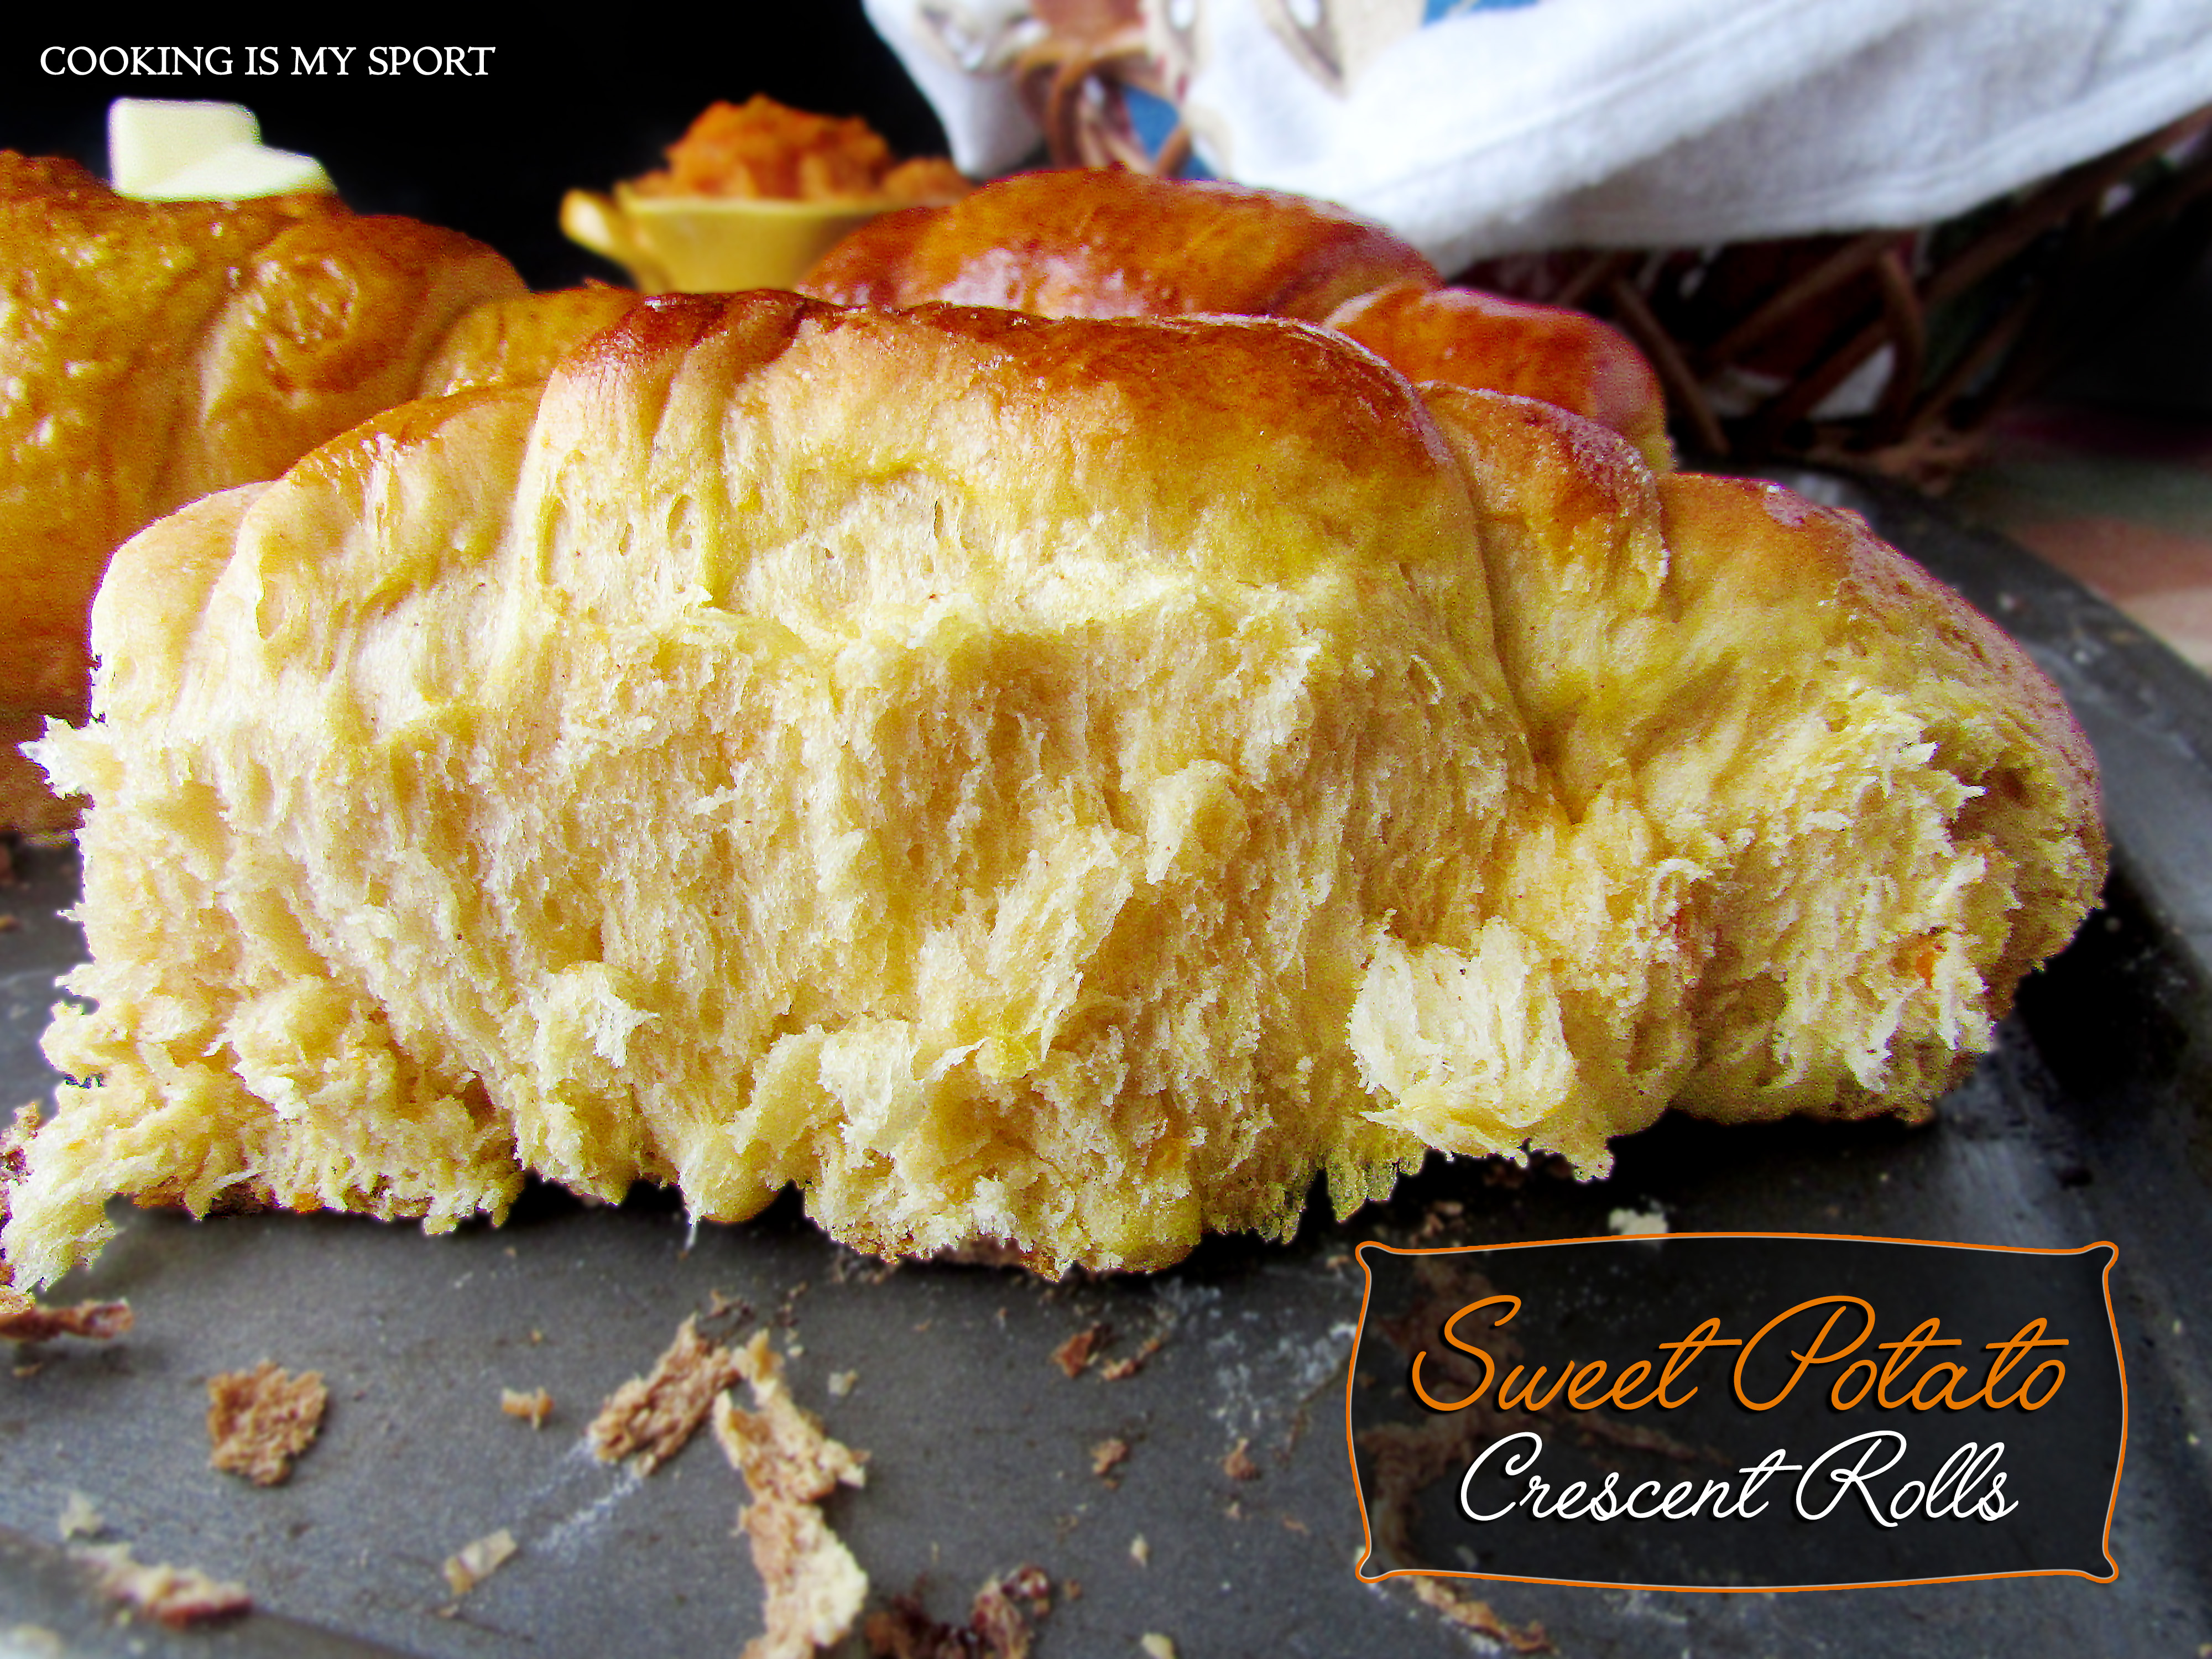 Sweet Potato Crescent Rolls6